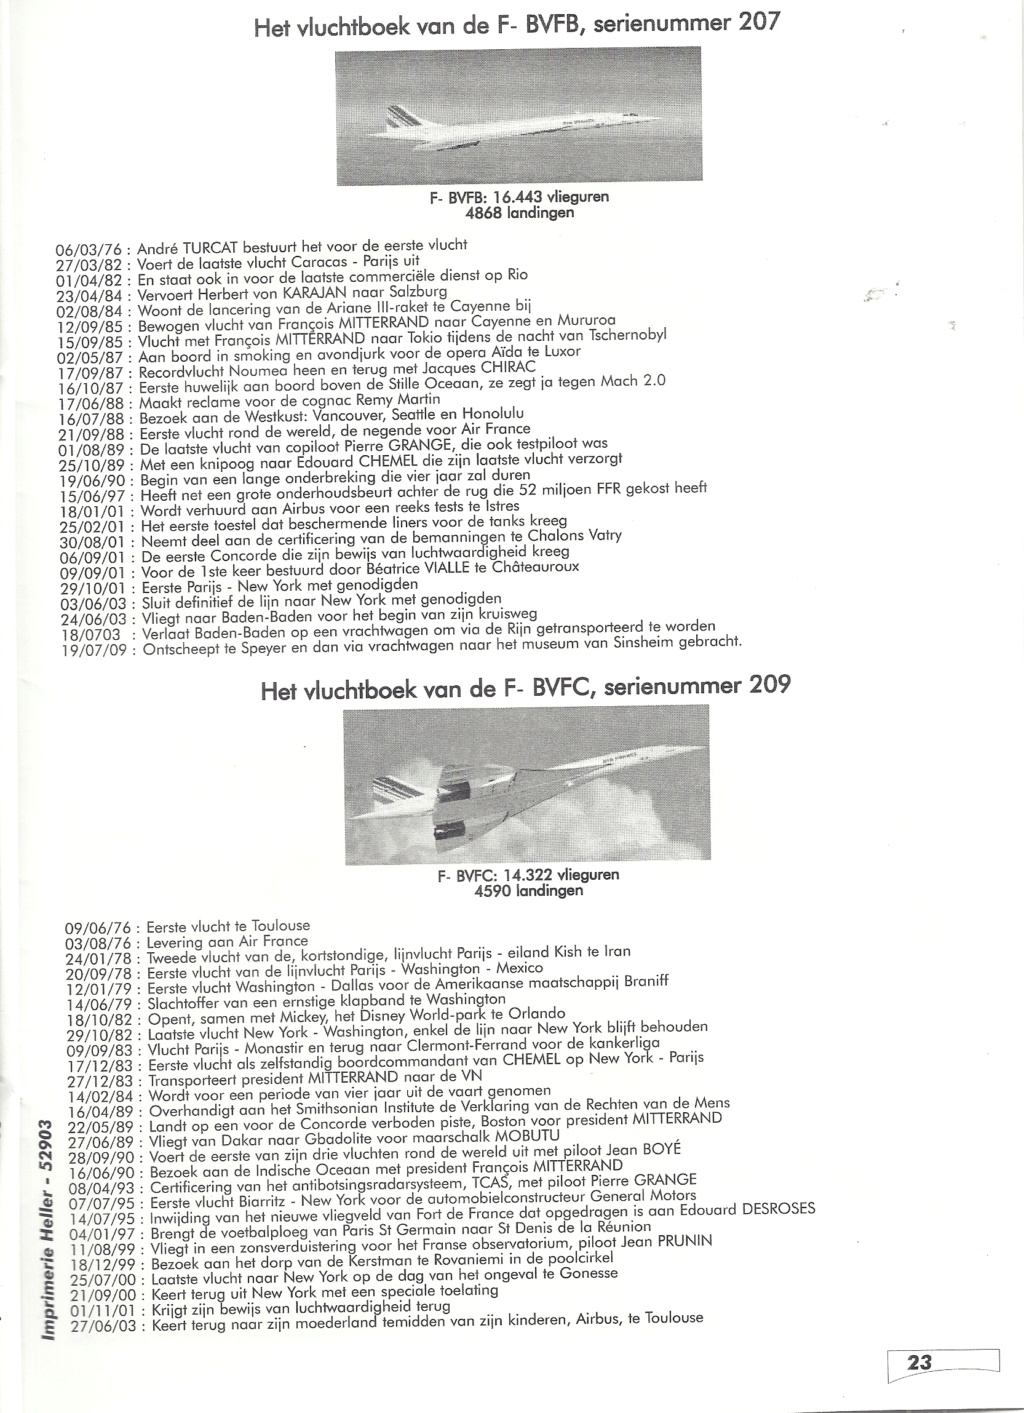 SUD AVIATION - BRITISH AIRCRAFT CORPORATION  CONCORDE 1/72ème Réf 52903 Notice Hell2273